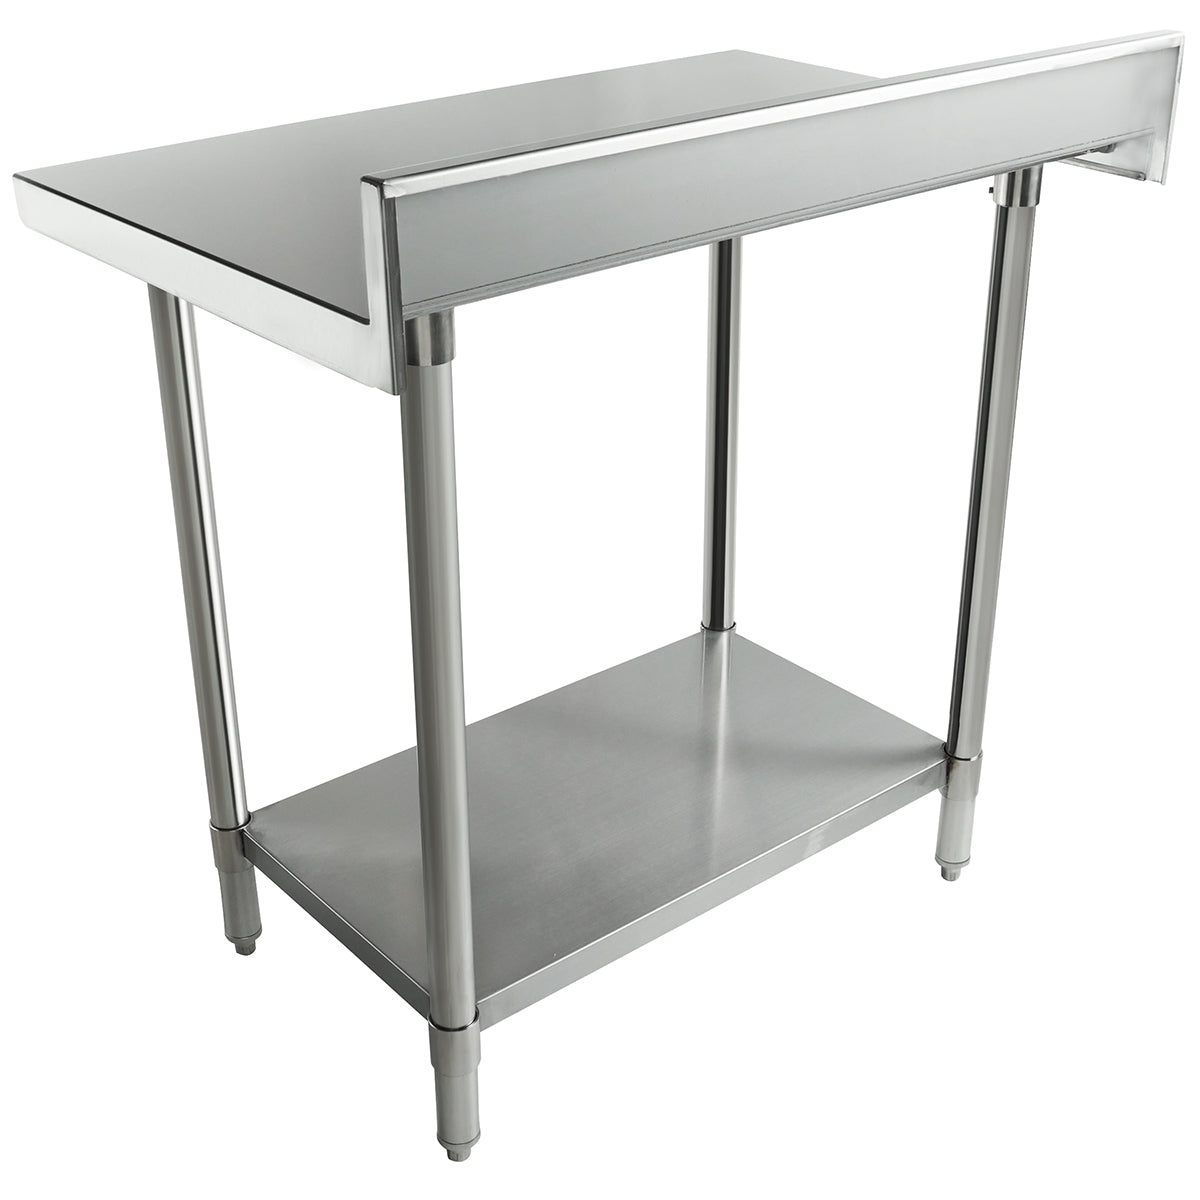 Empura 36" x 24" 16-Gauge 304 Stainless Steel Commercial Work Table with 4" Backsplash plus 430 Stainless Steel Legs and Undershelf